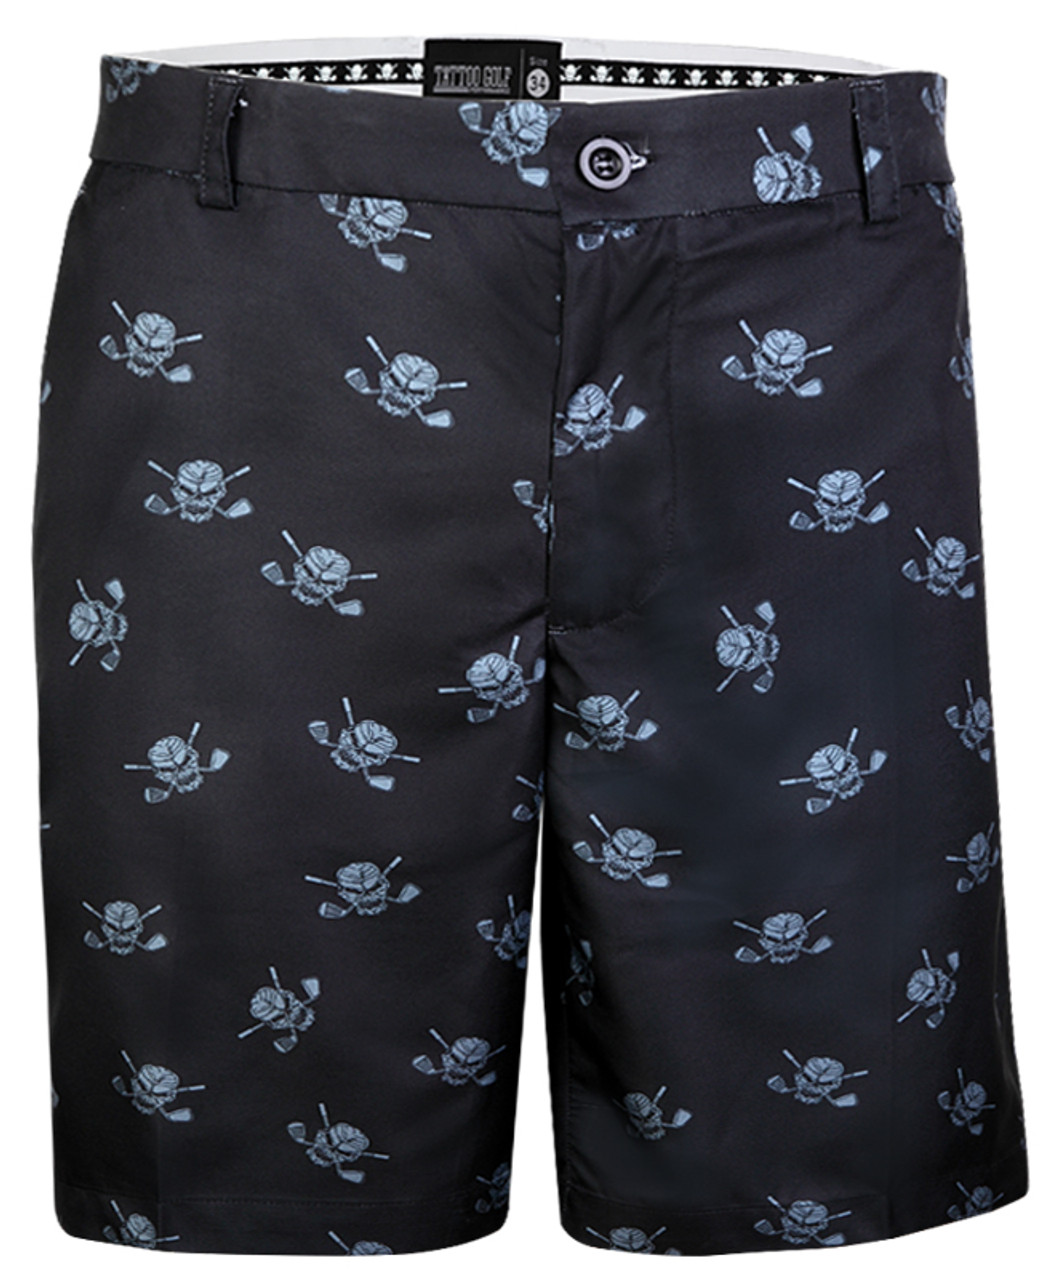 Camo Golf Shorts for Men - ProCool Performance - black Camo skull clothing